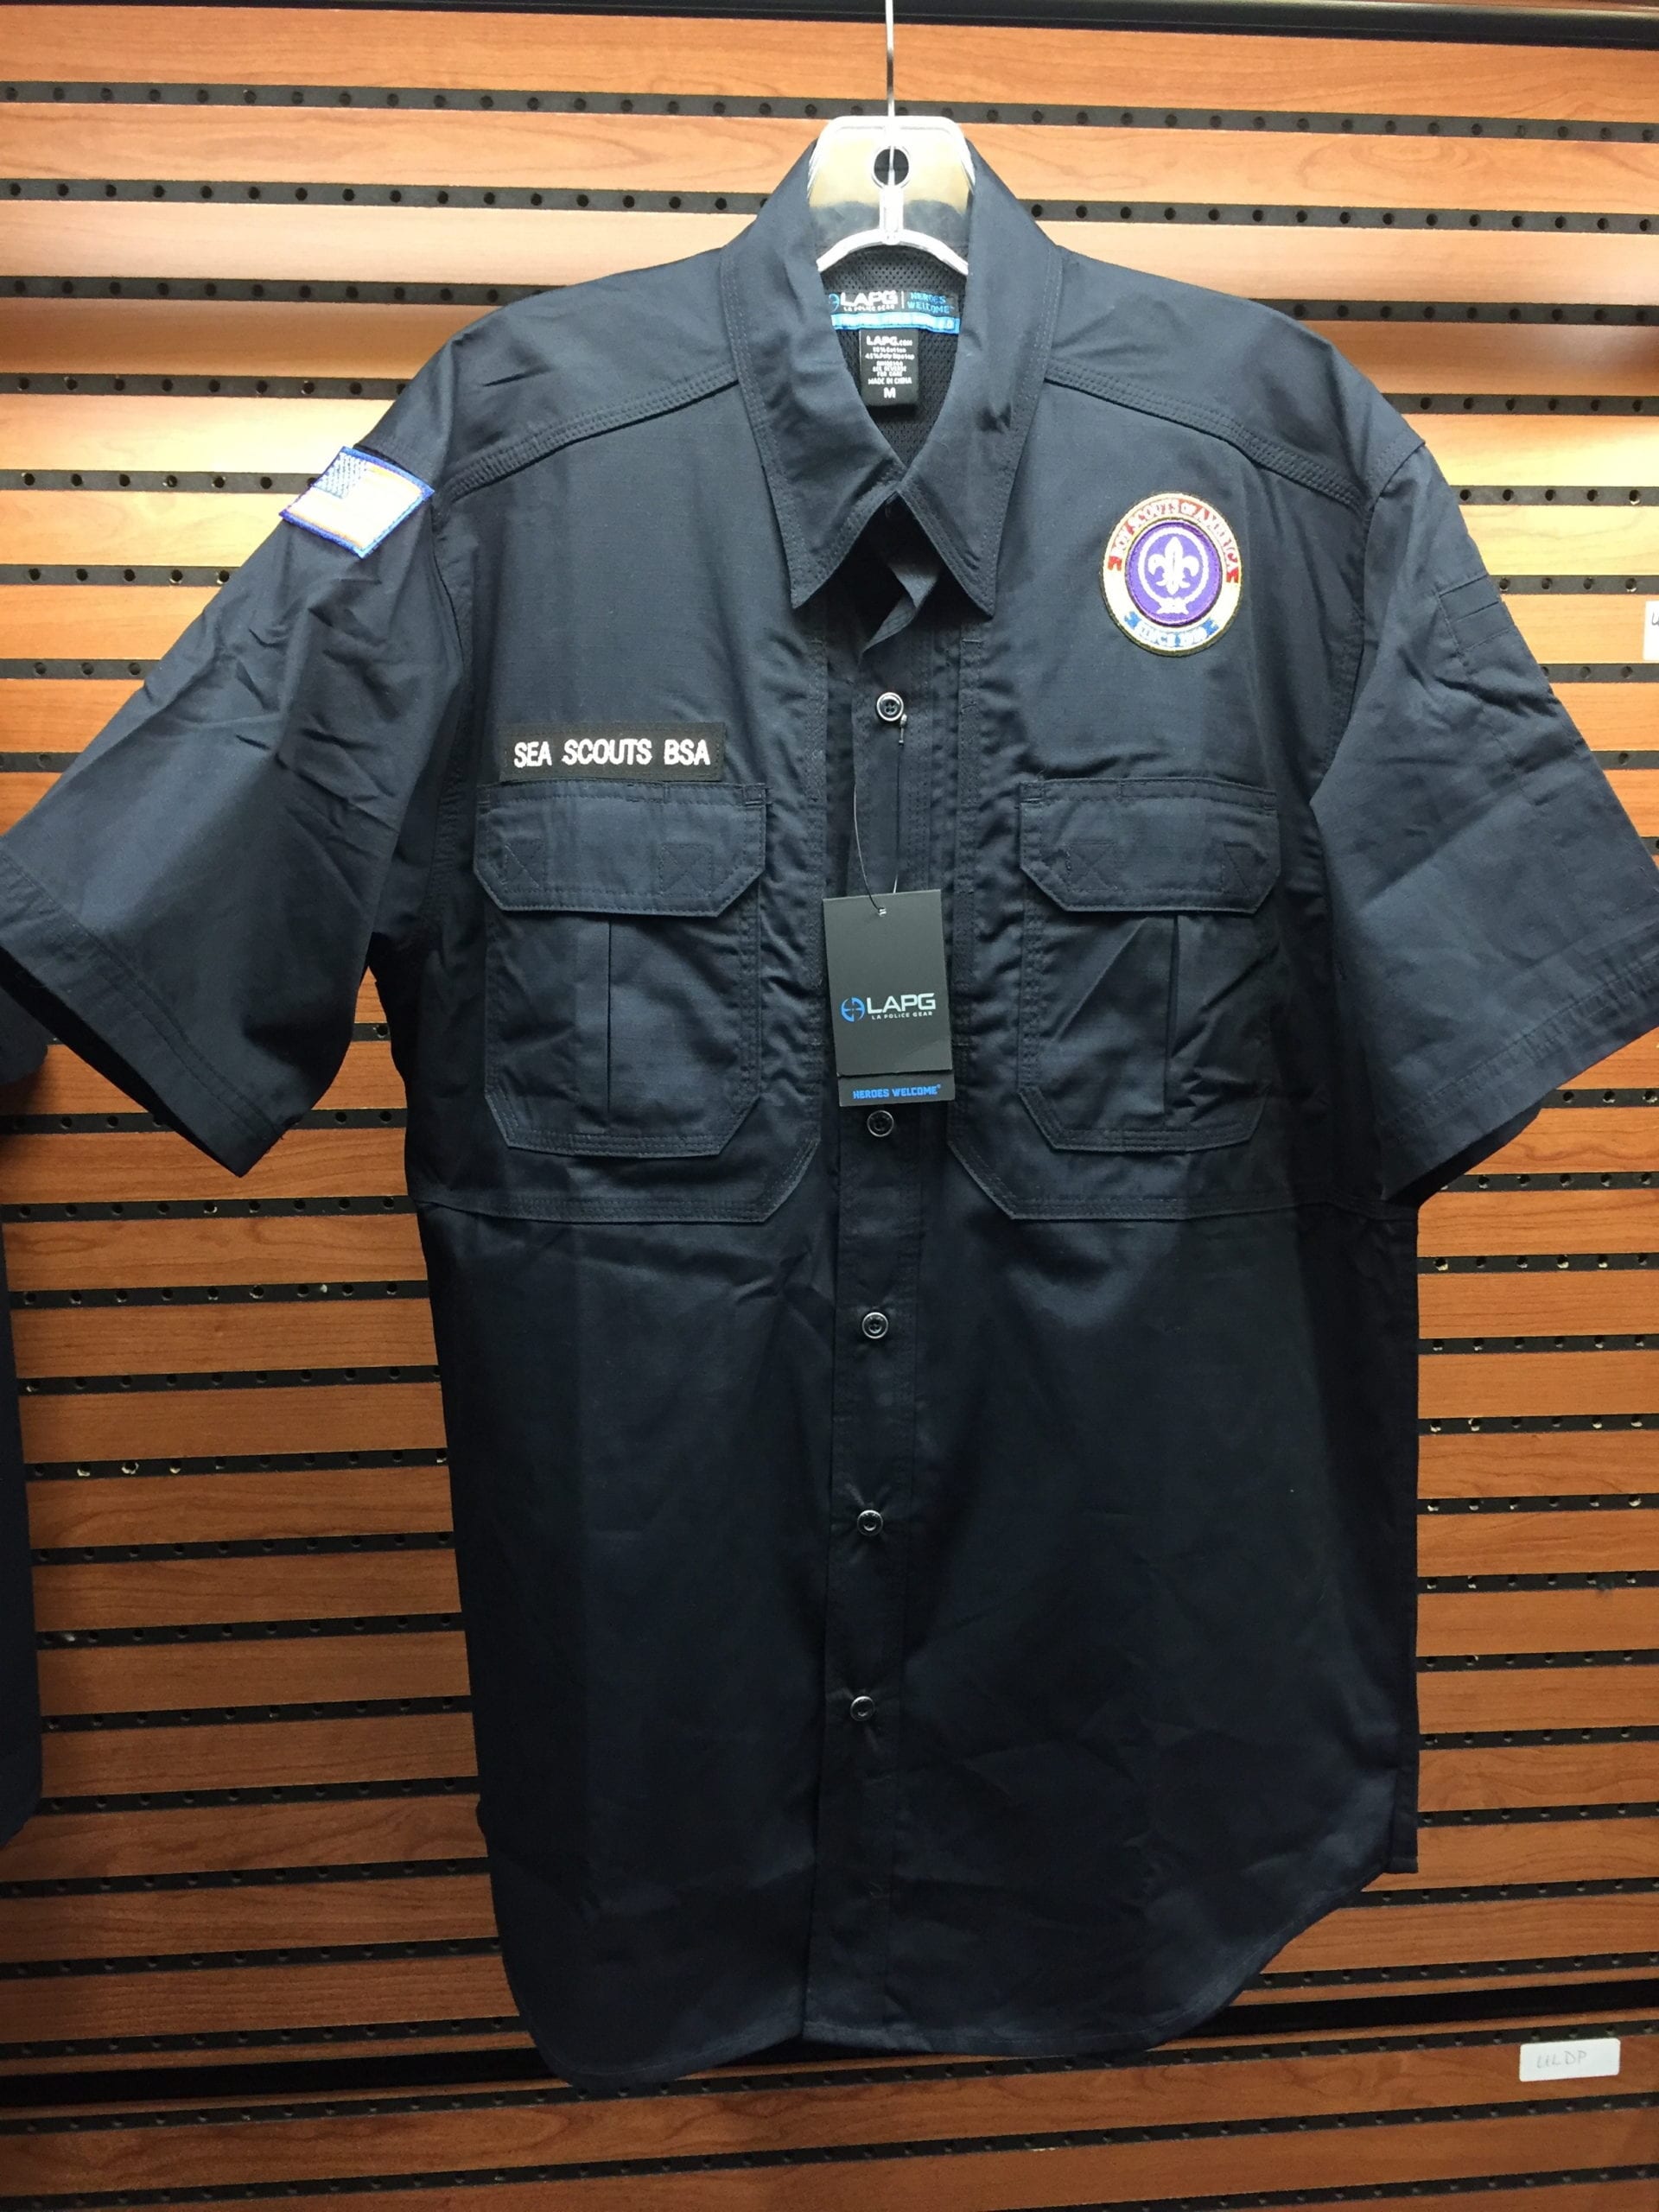 BSA Uniform Kit